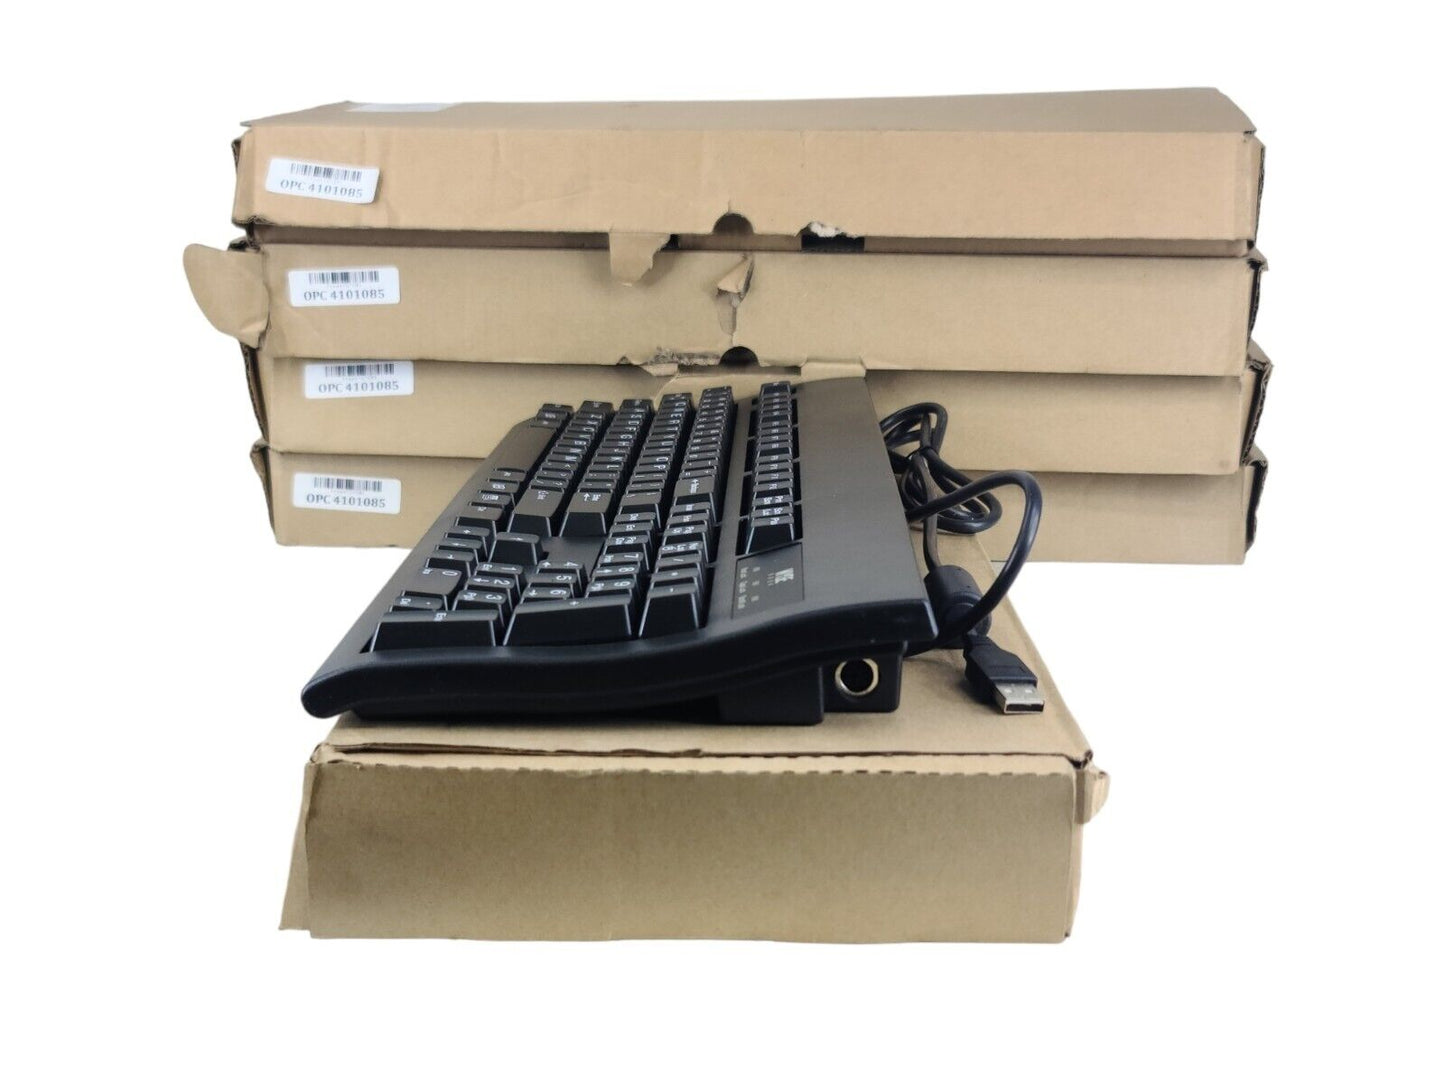 Lot of 5 NEW Genuine WYSE Keyboard Black USB PS2 Port 901716-06L